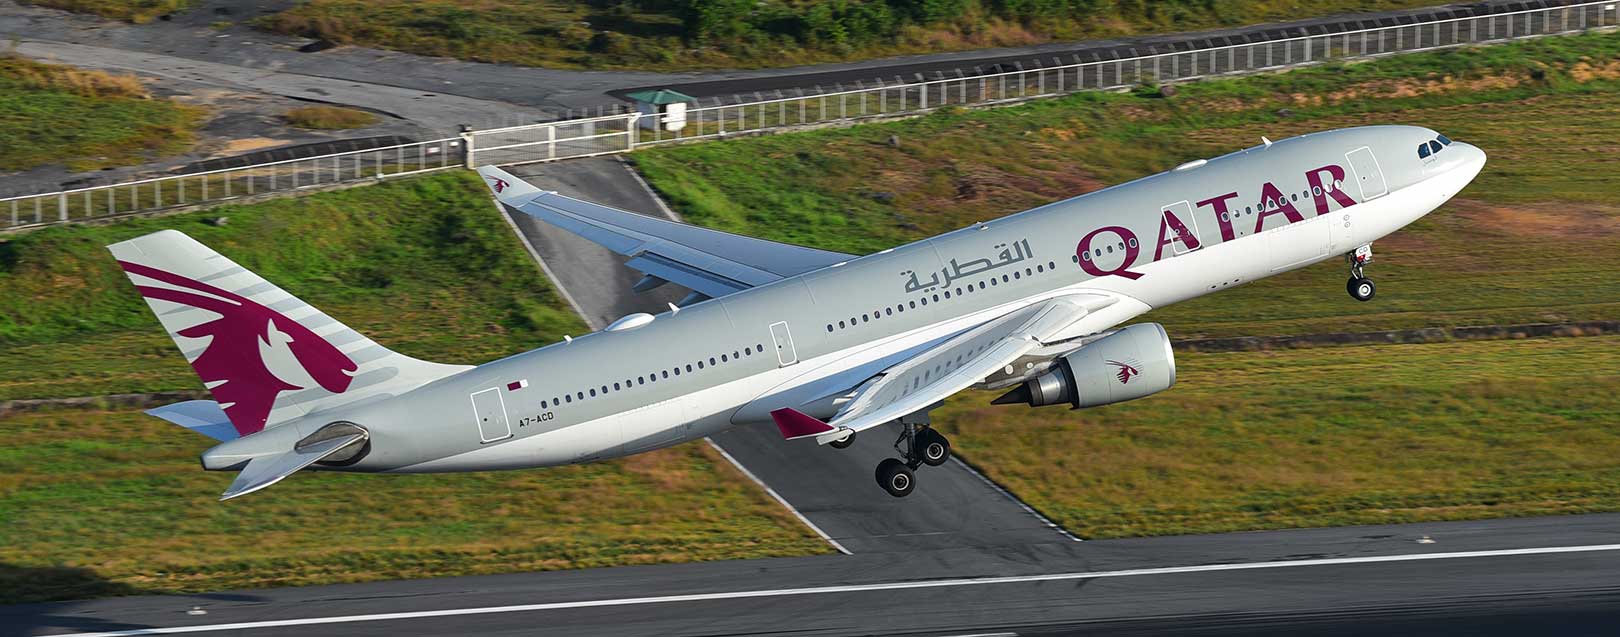 Qatar airways transit business threatened by Gulf crisis